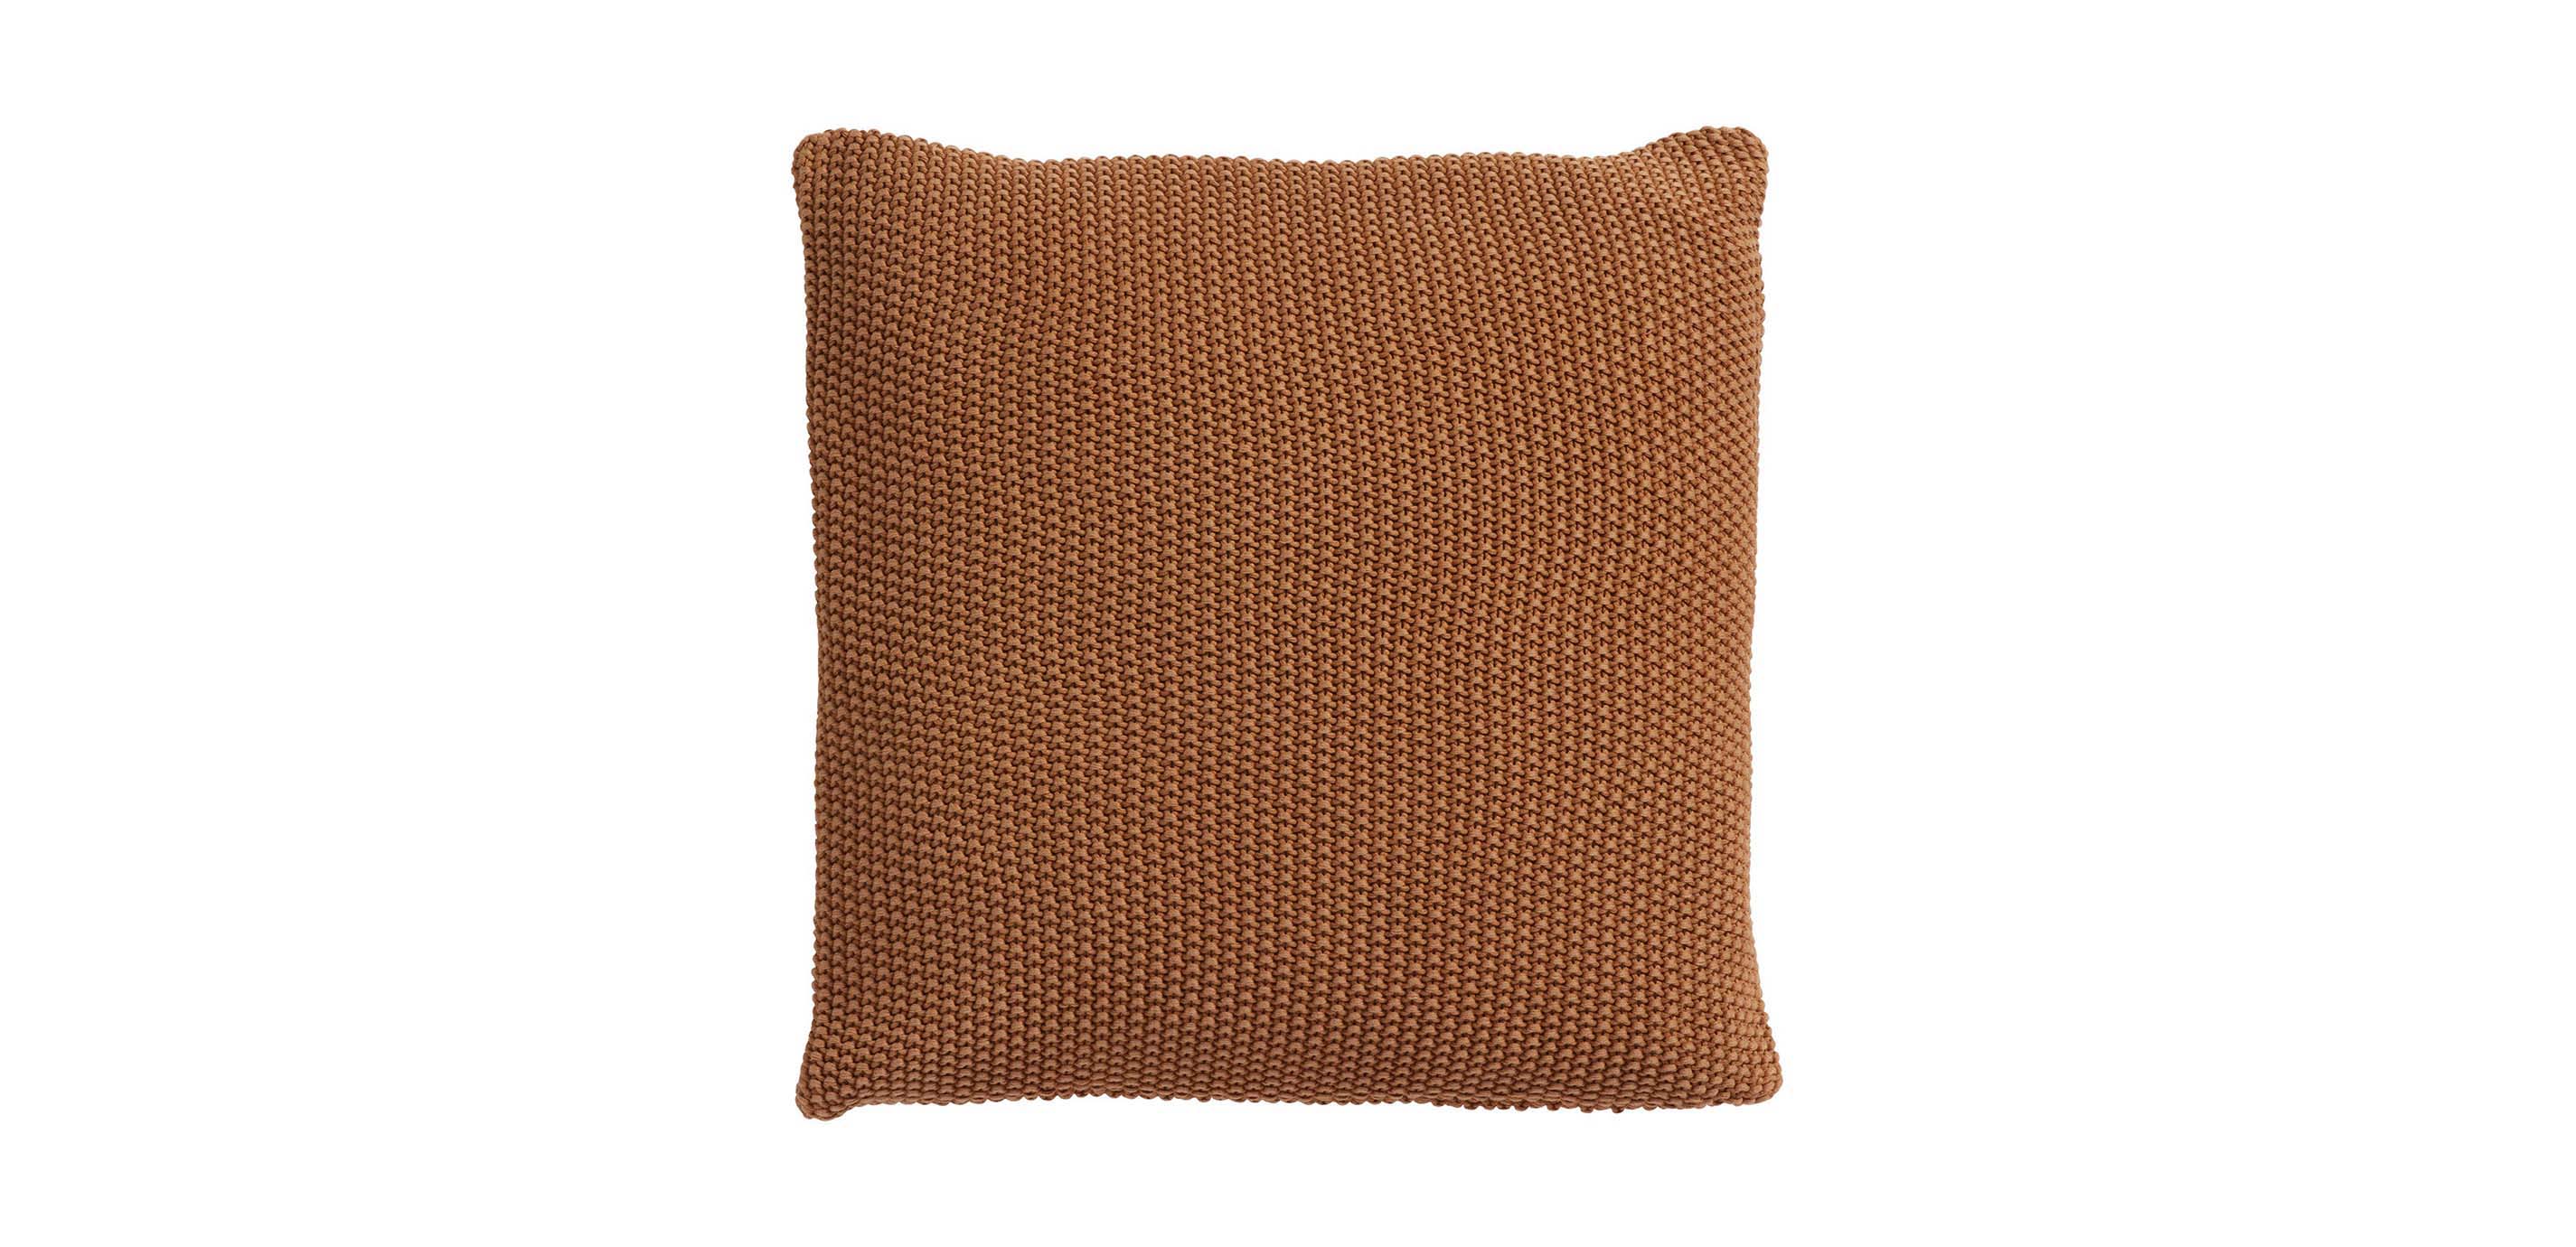 Bayside Seed Stitch Pillow